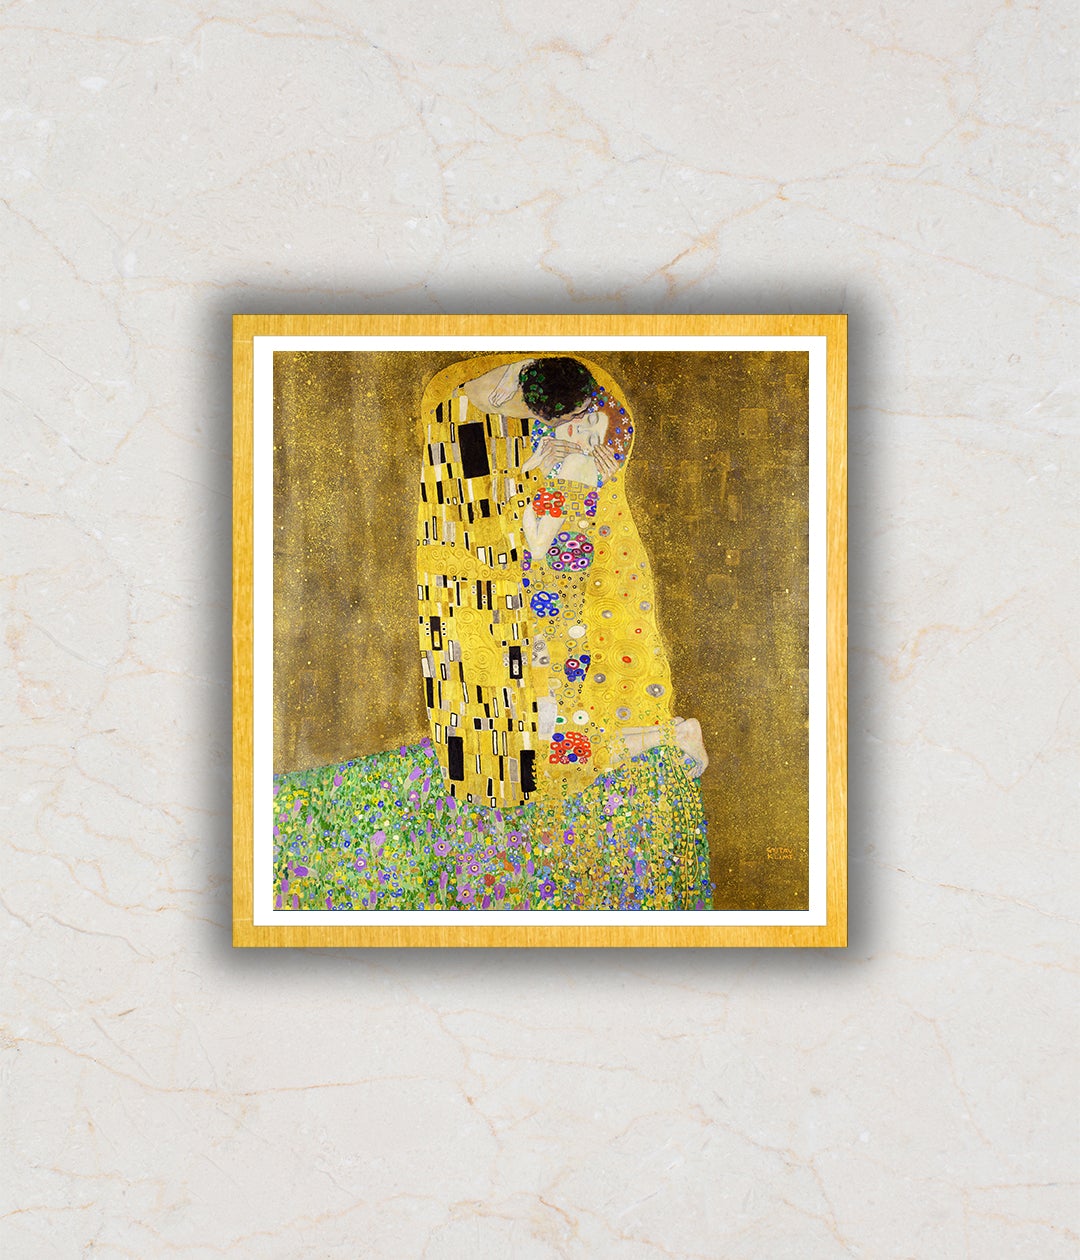 Gustav Klimt 'The Kiss' Modern Abstract Painting Artwork For Home Wall D�_cor